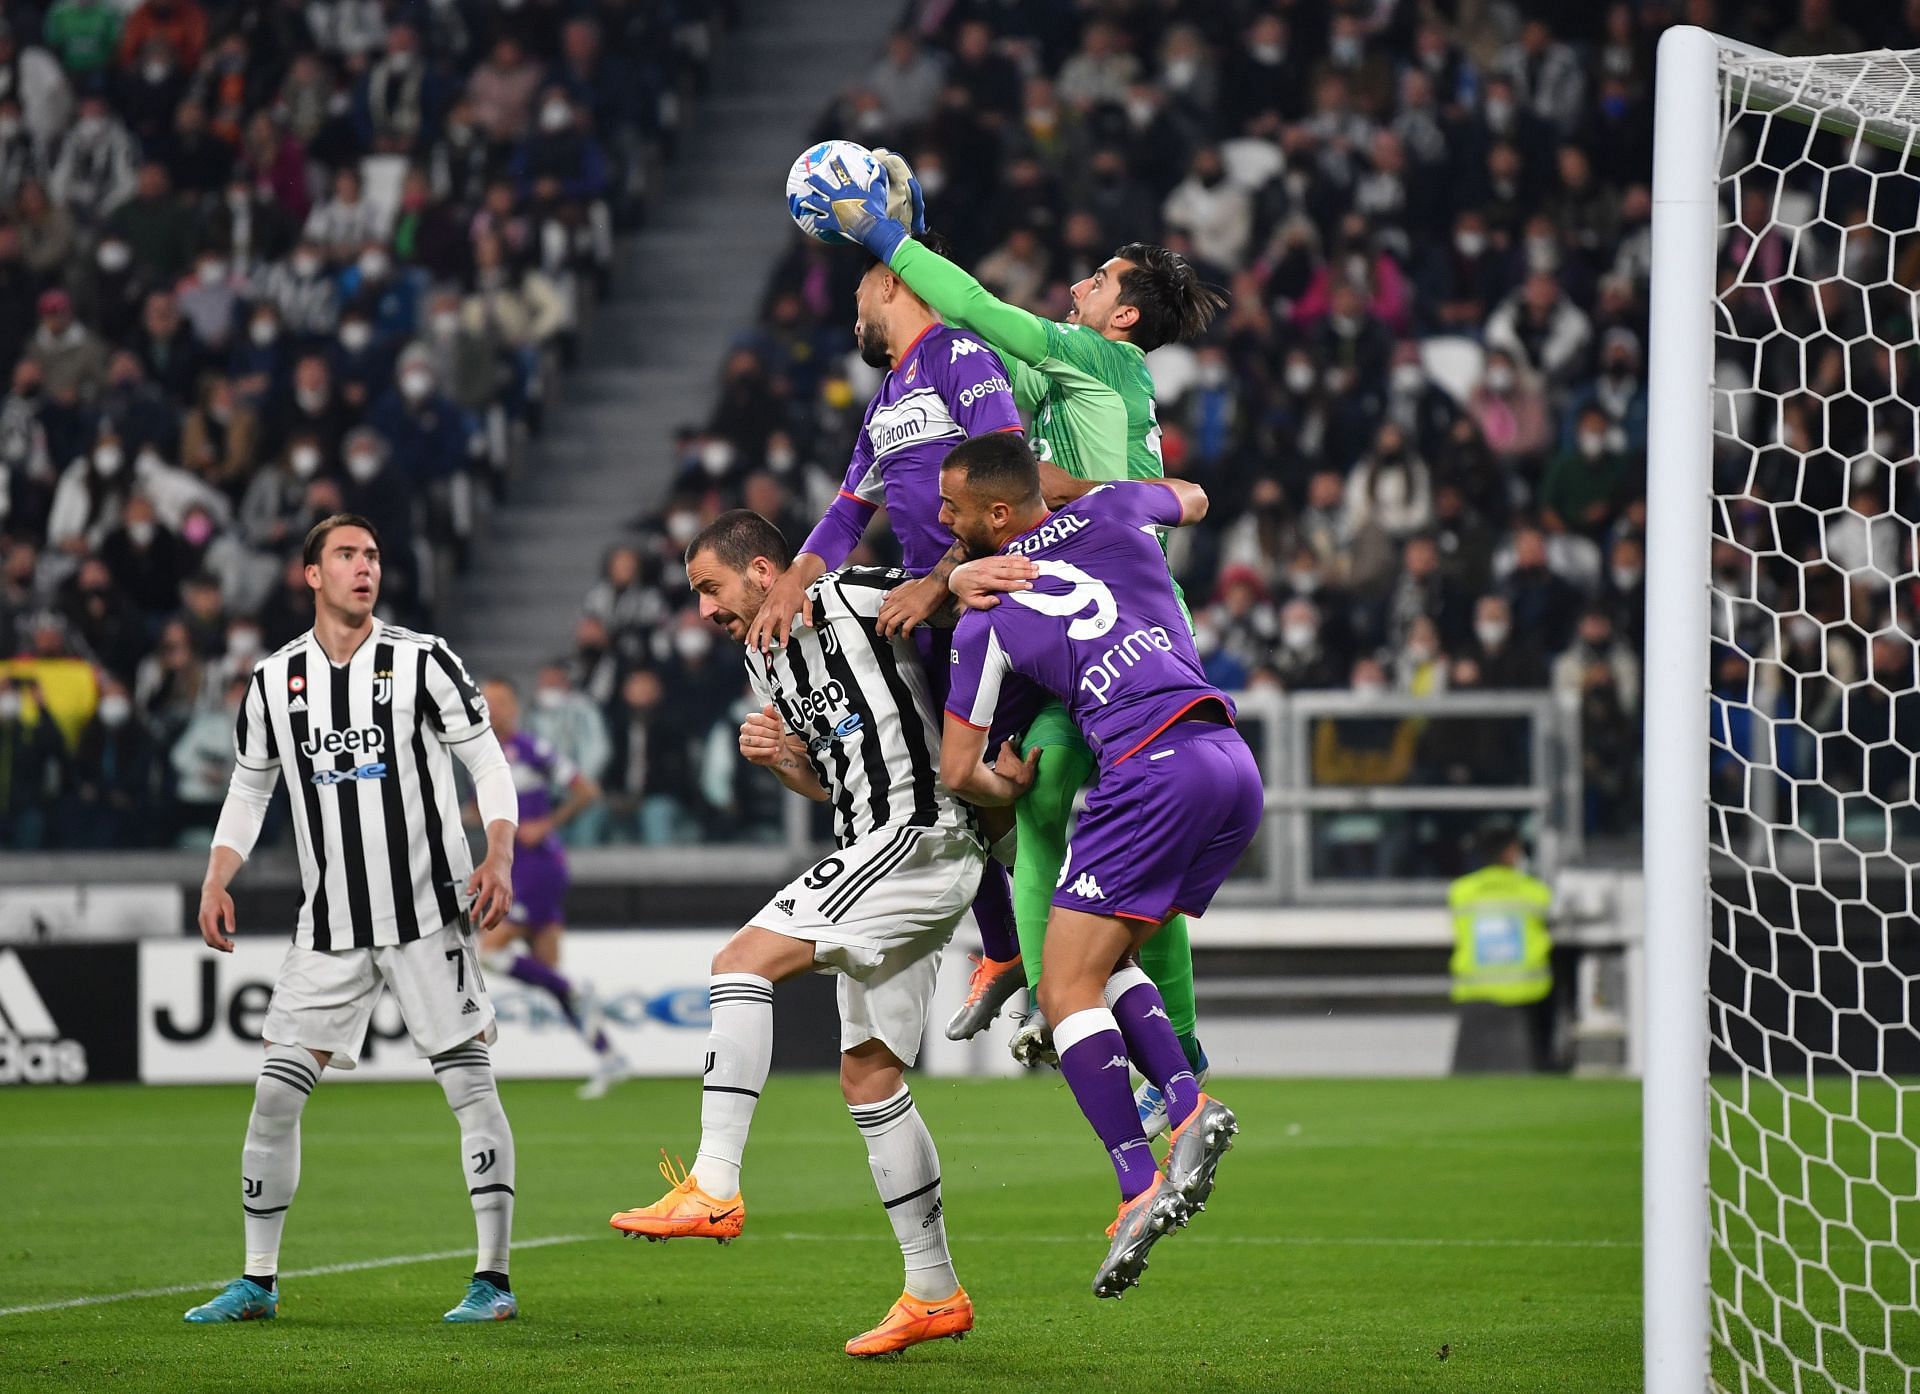 Juventus will wrap up their season against Fiorentina on Saturday.